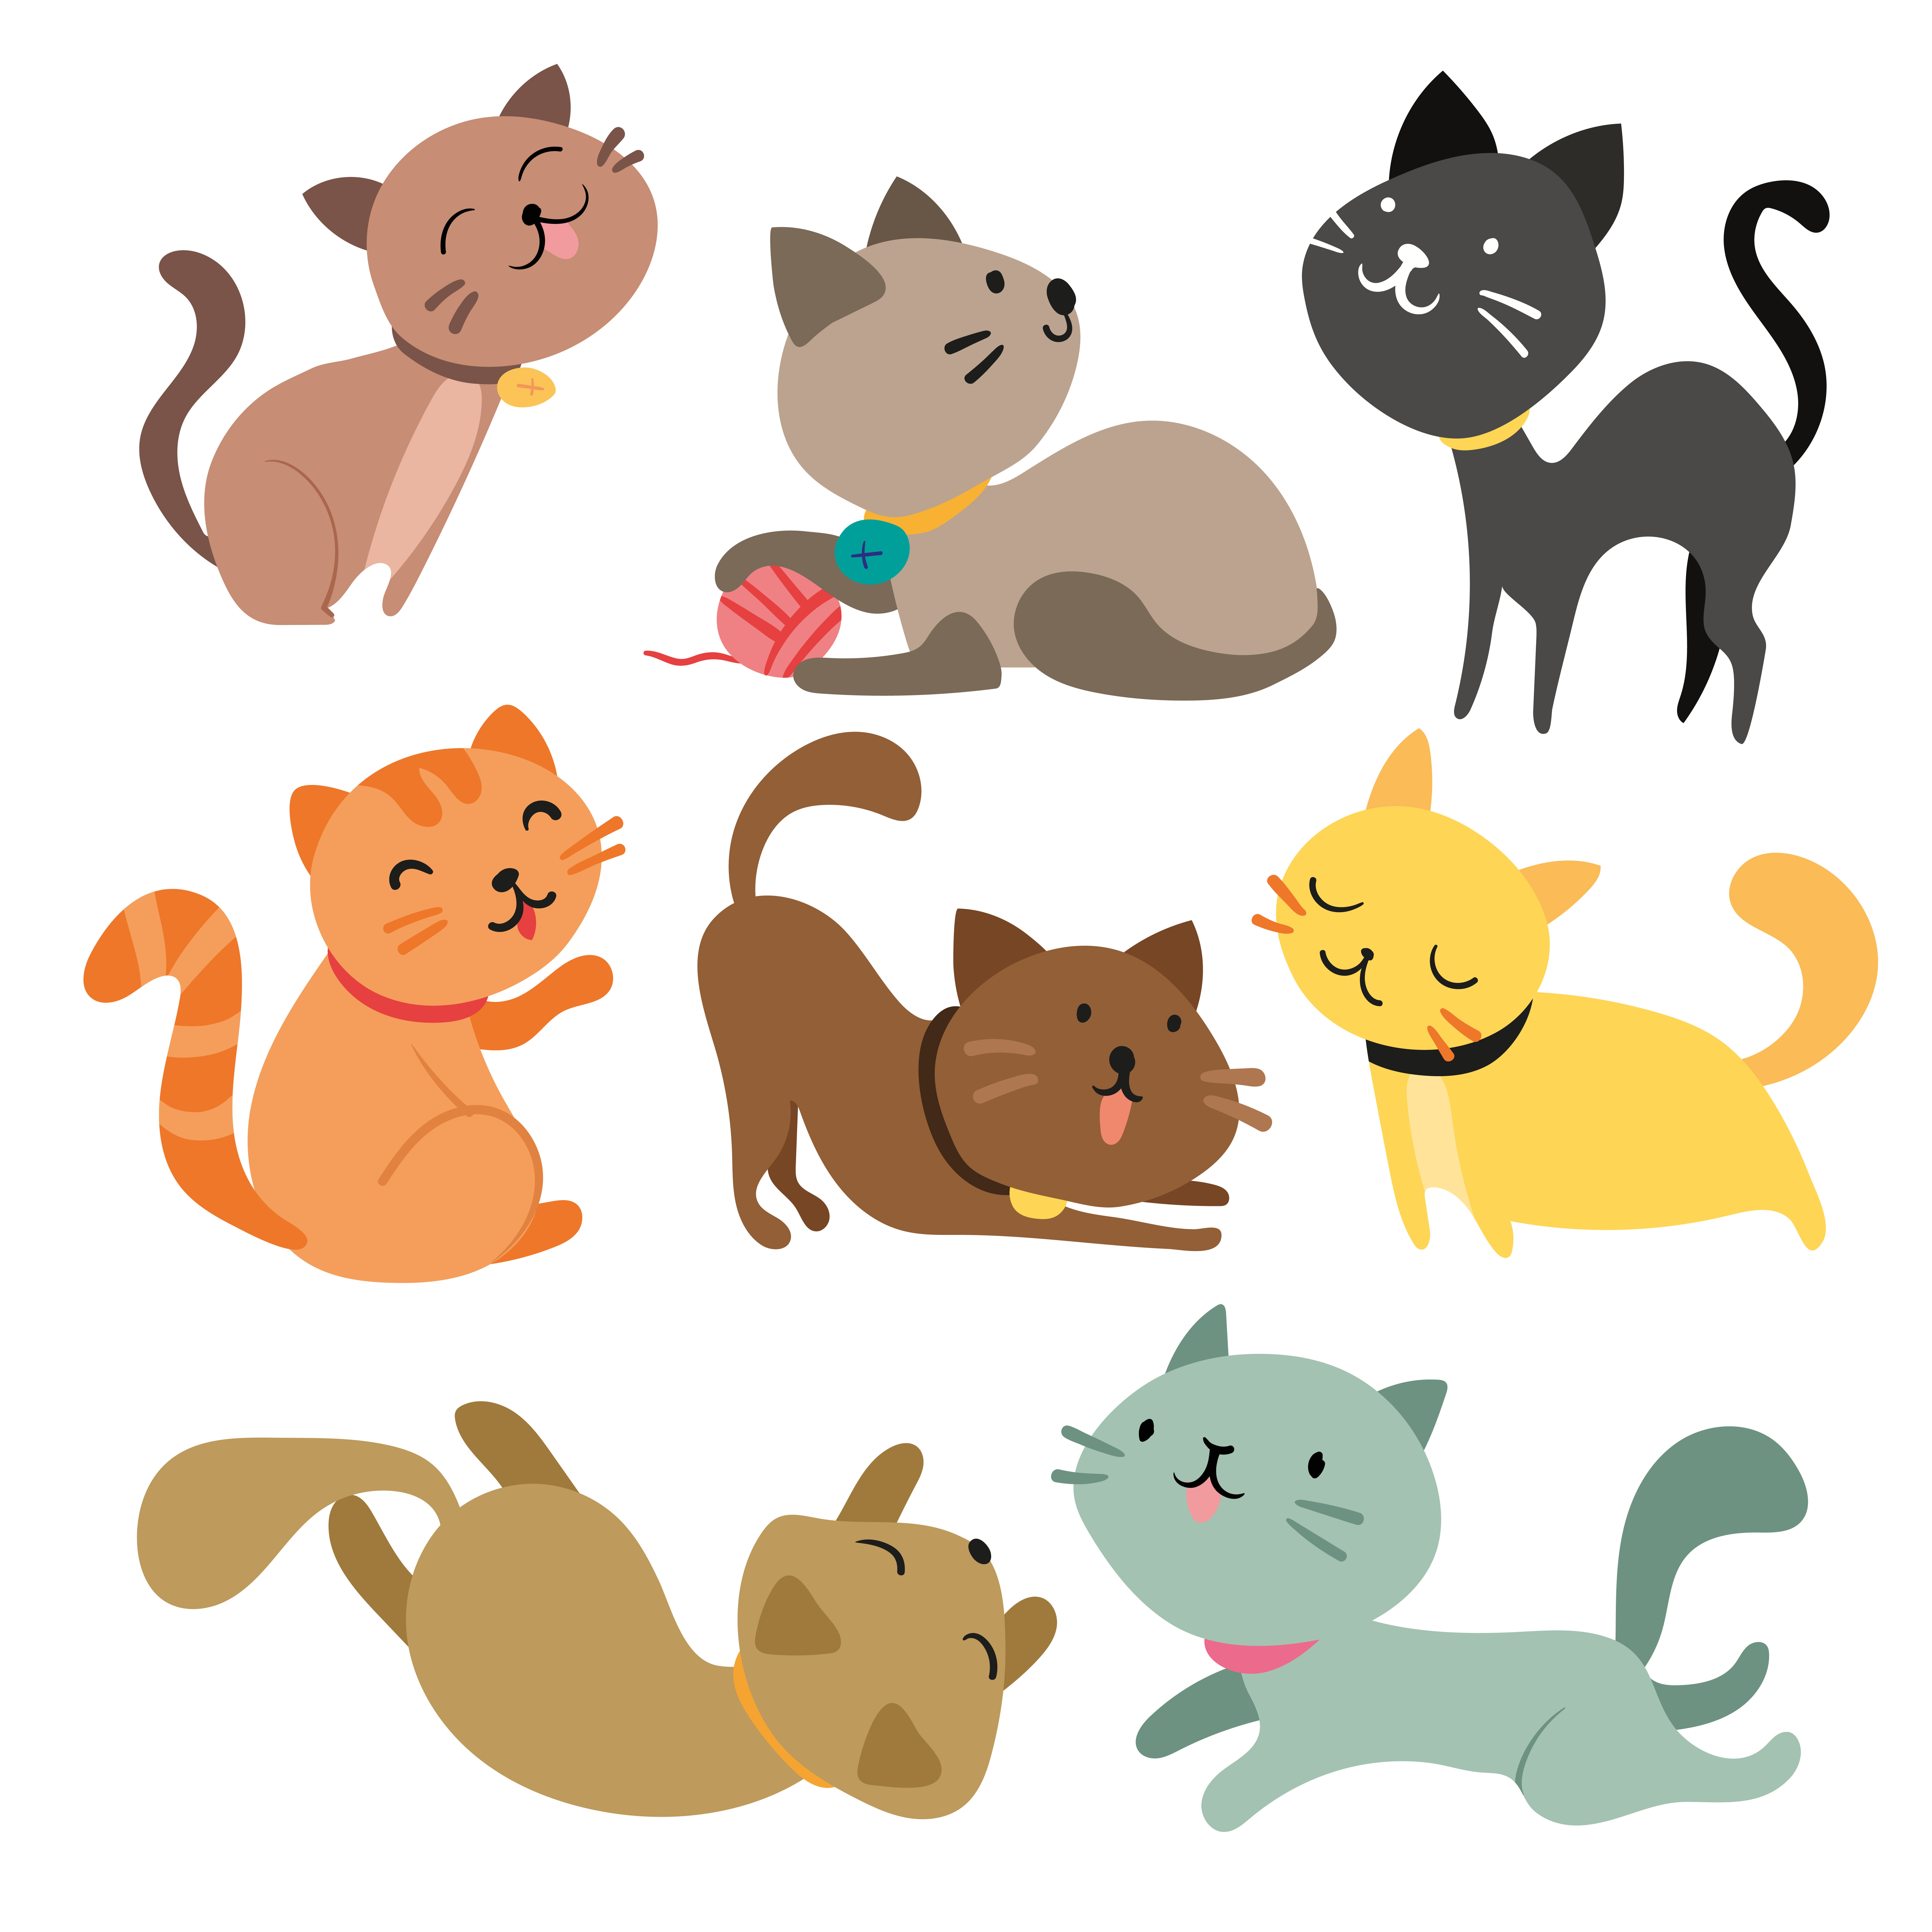 Cute Cat Free Vector Art - (29,958 Free Downloads)